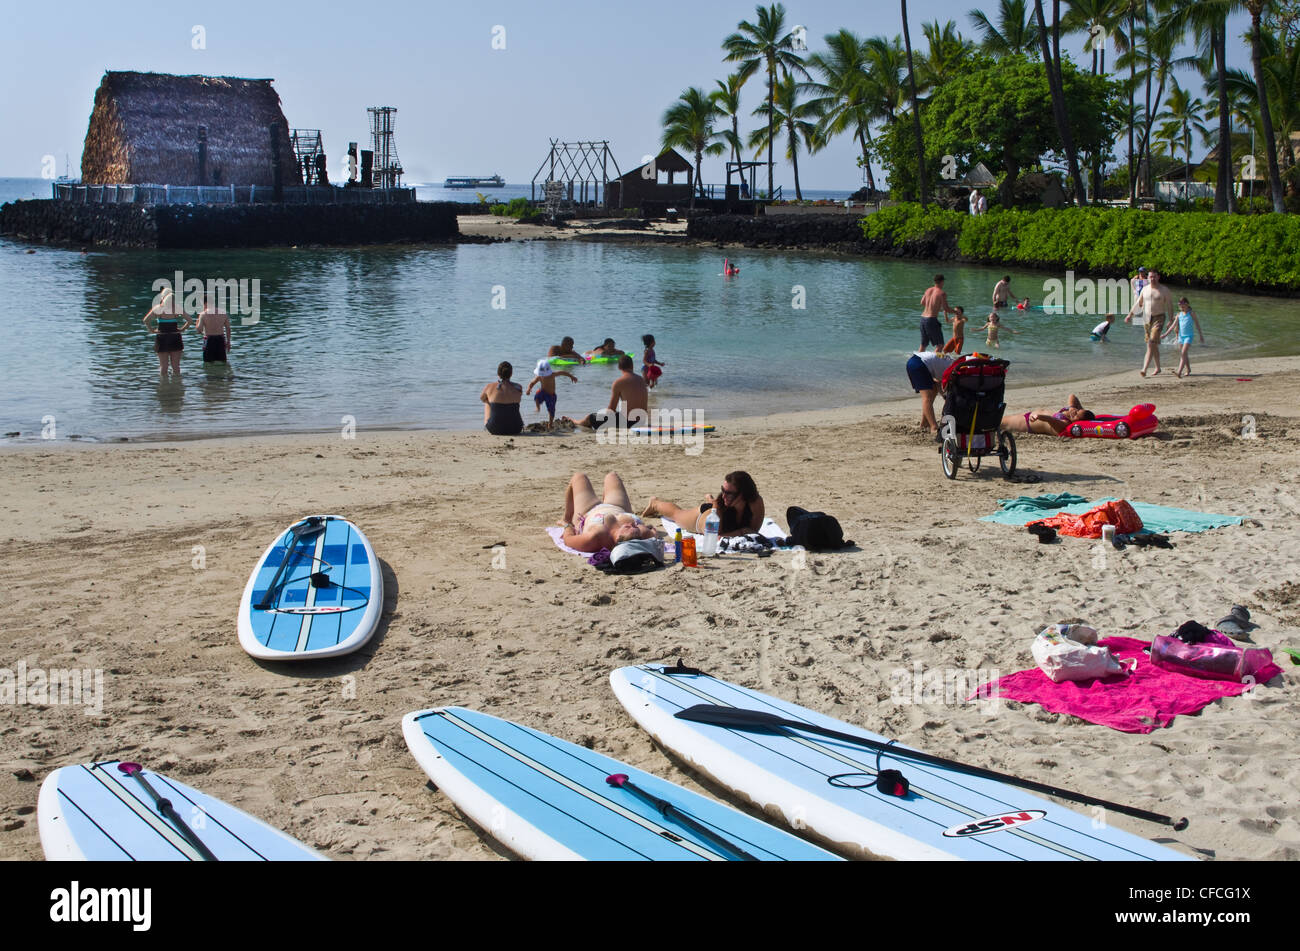 Paddleboards and sunbathers at Kamakahonu Beach. 'Ahu'ena Heiau in background. Stock Photo